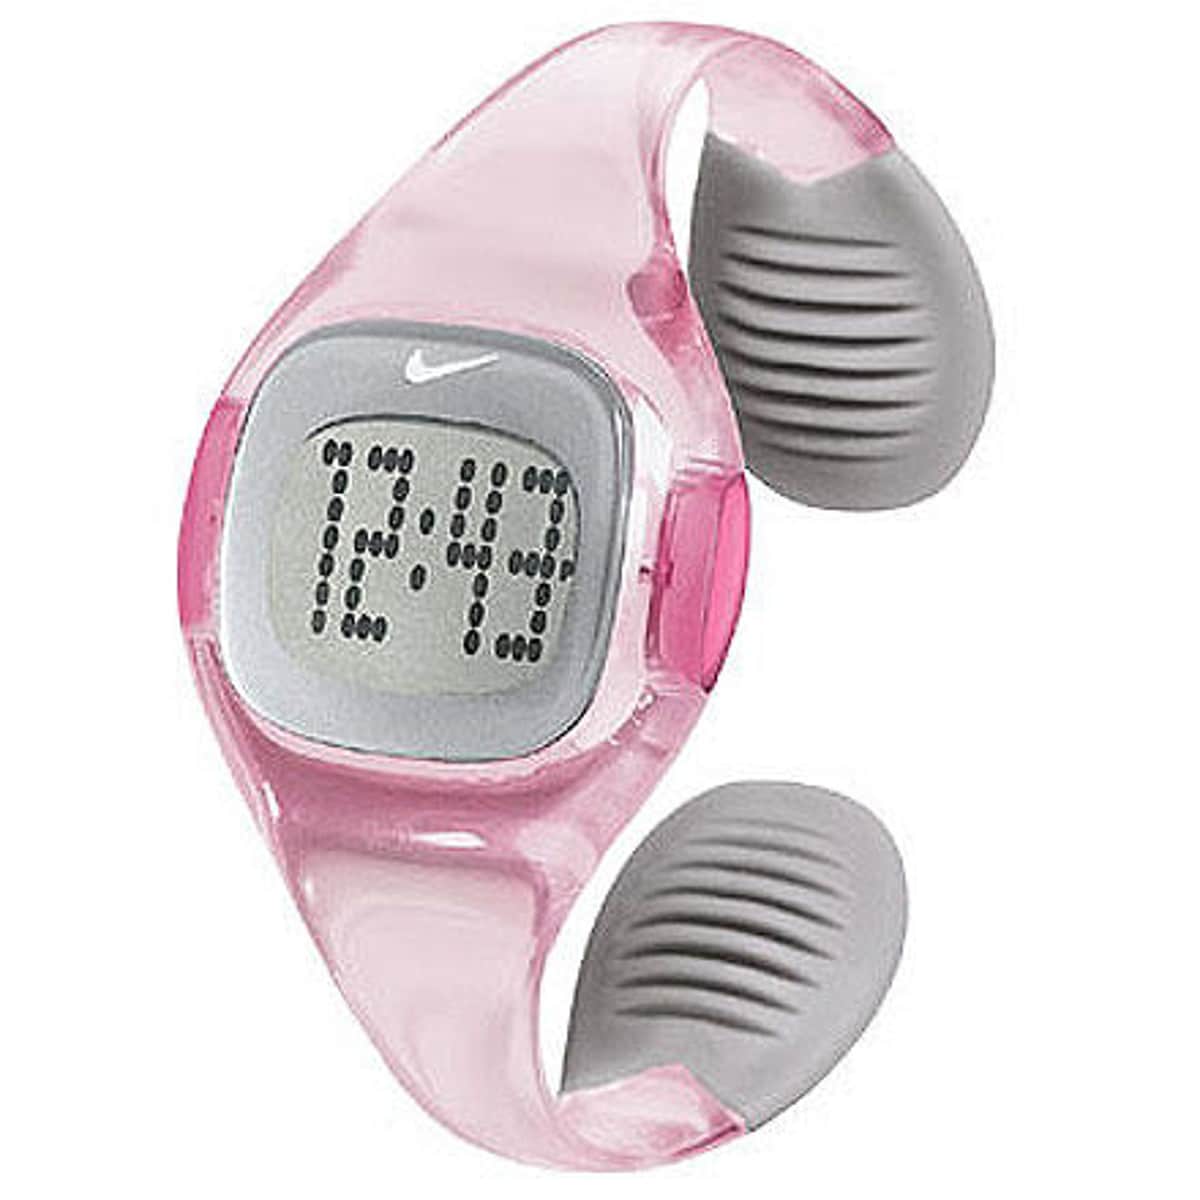 Nike Timing Presto Cee Digital Small Watch - Accessories